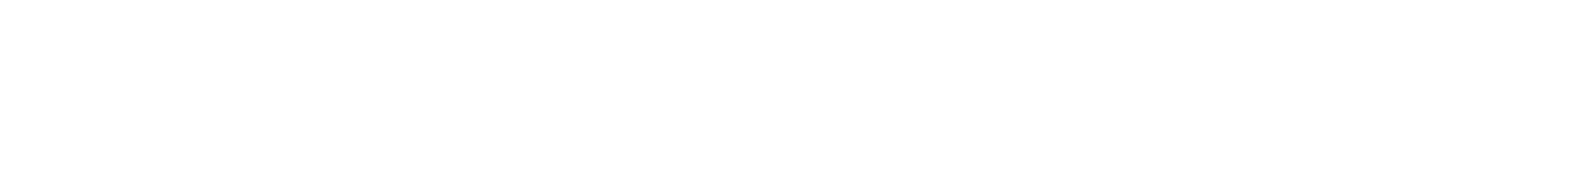 George Weston logo large for dark backgrounds (transparent PNG)